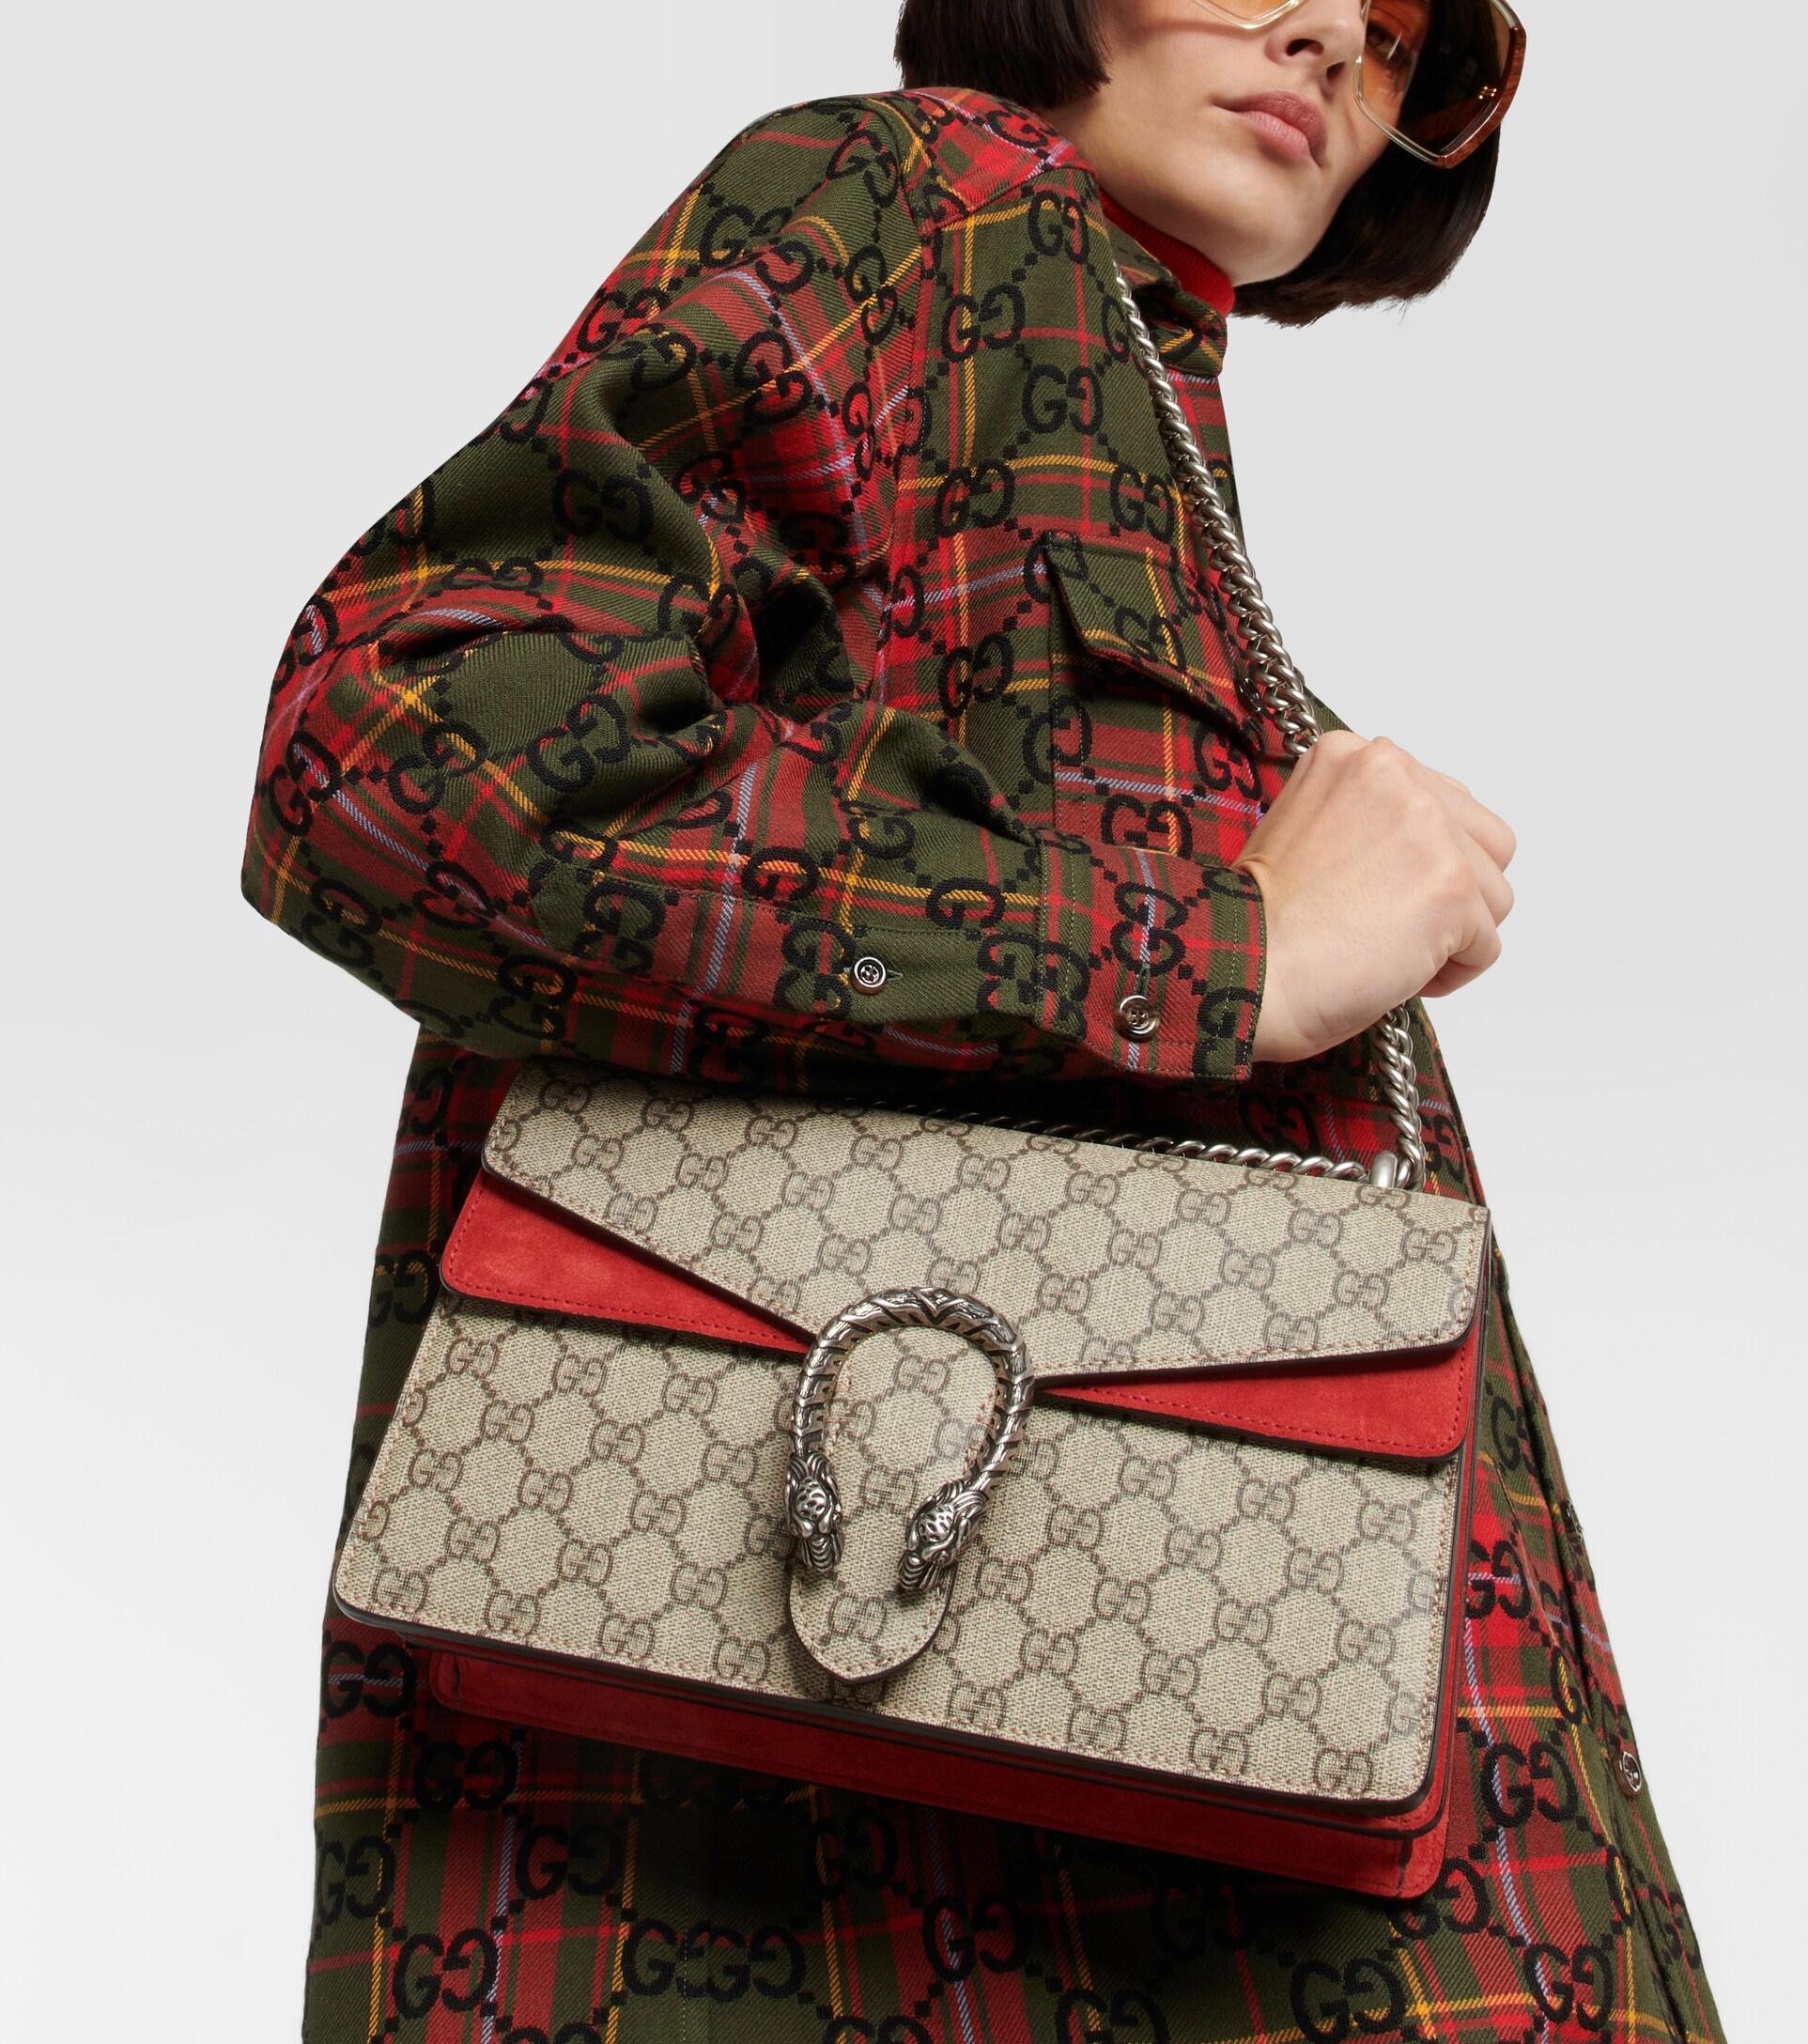 Gucci Dionysus GG Small Shoulder Bag